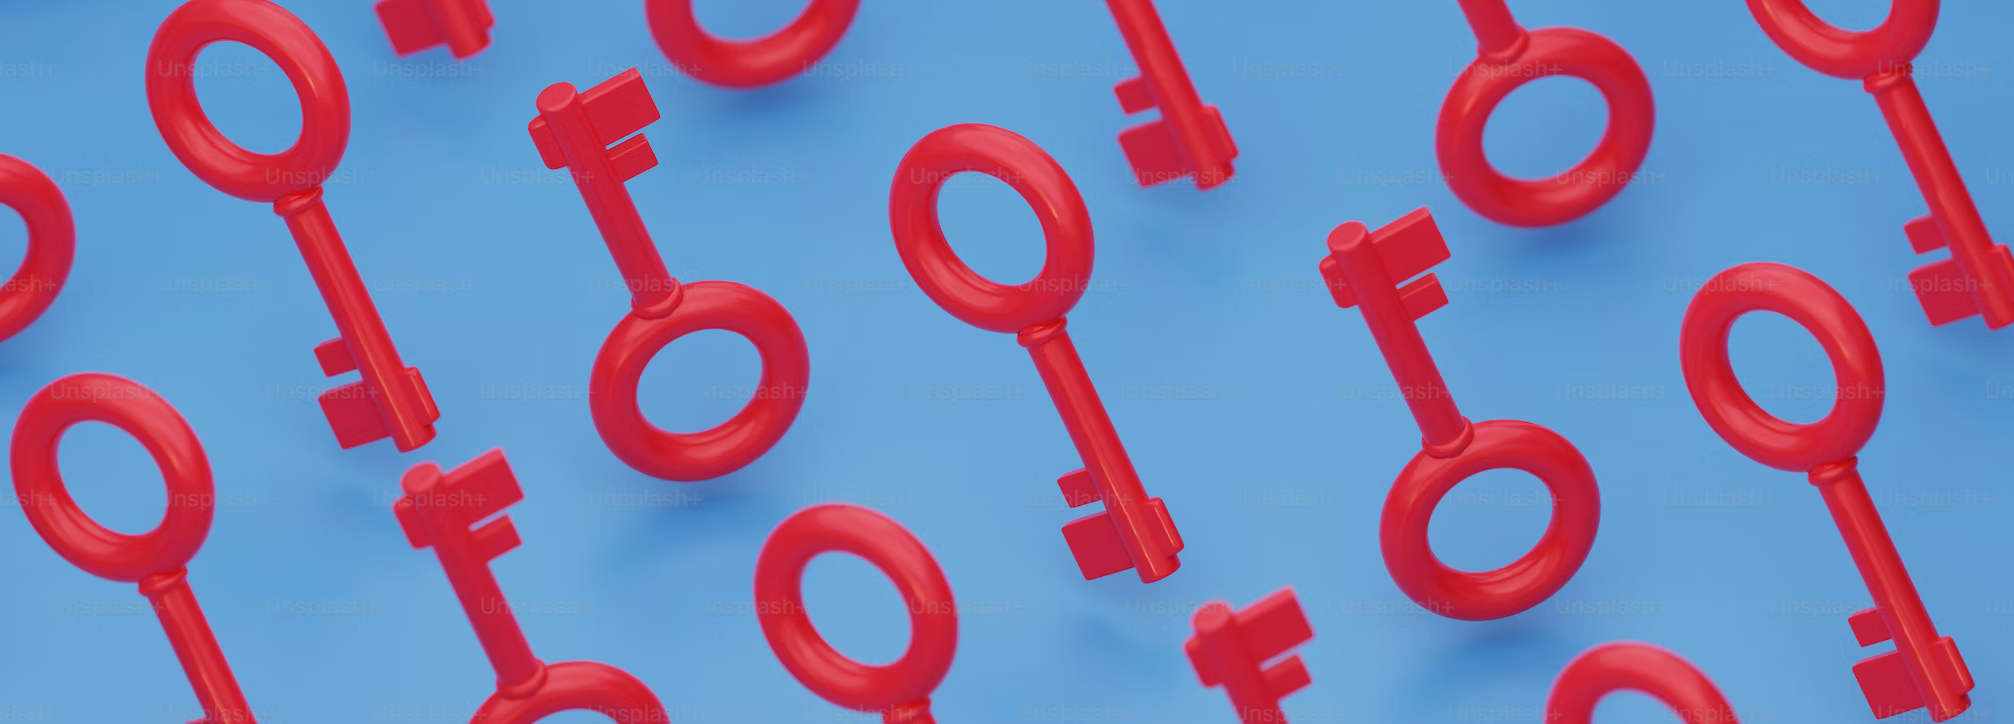 Several red keys on a light blue background.